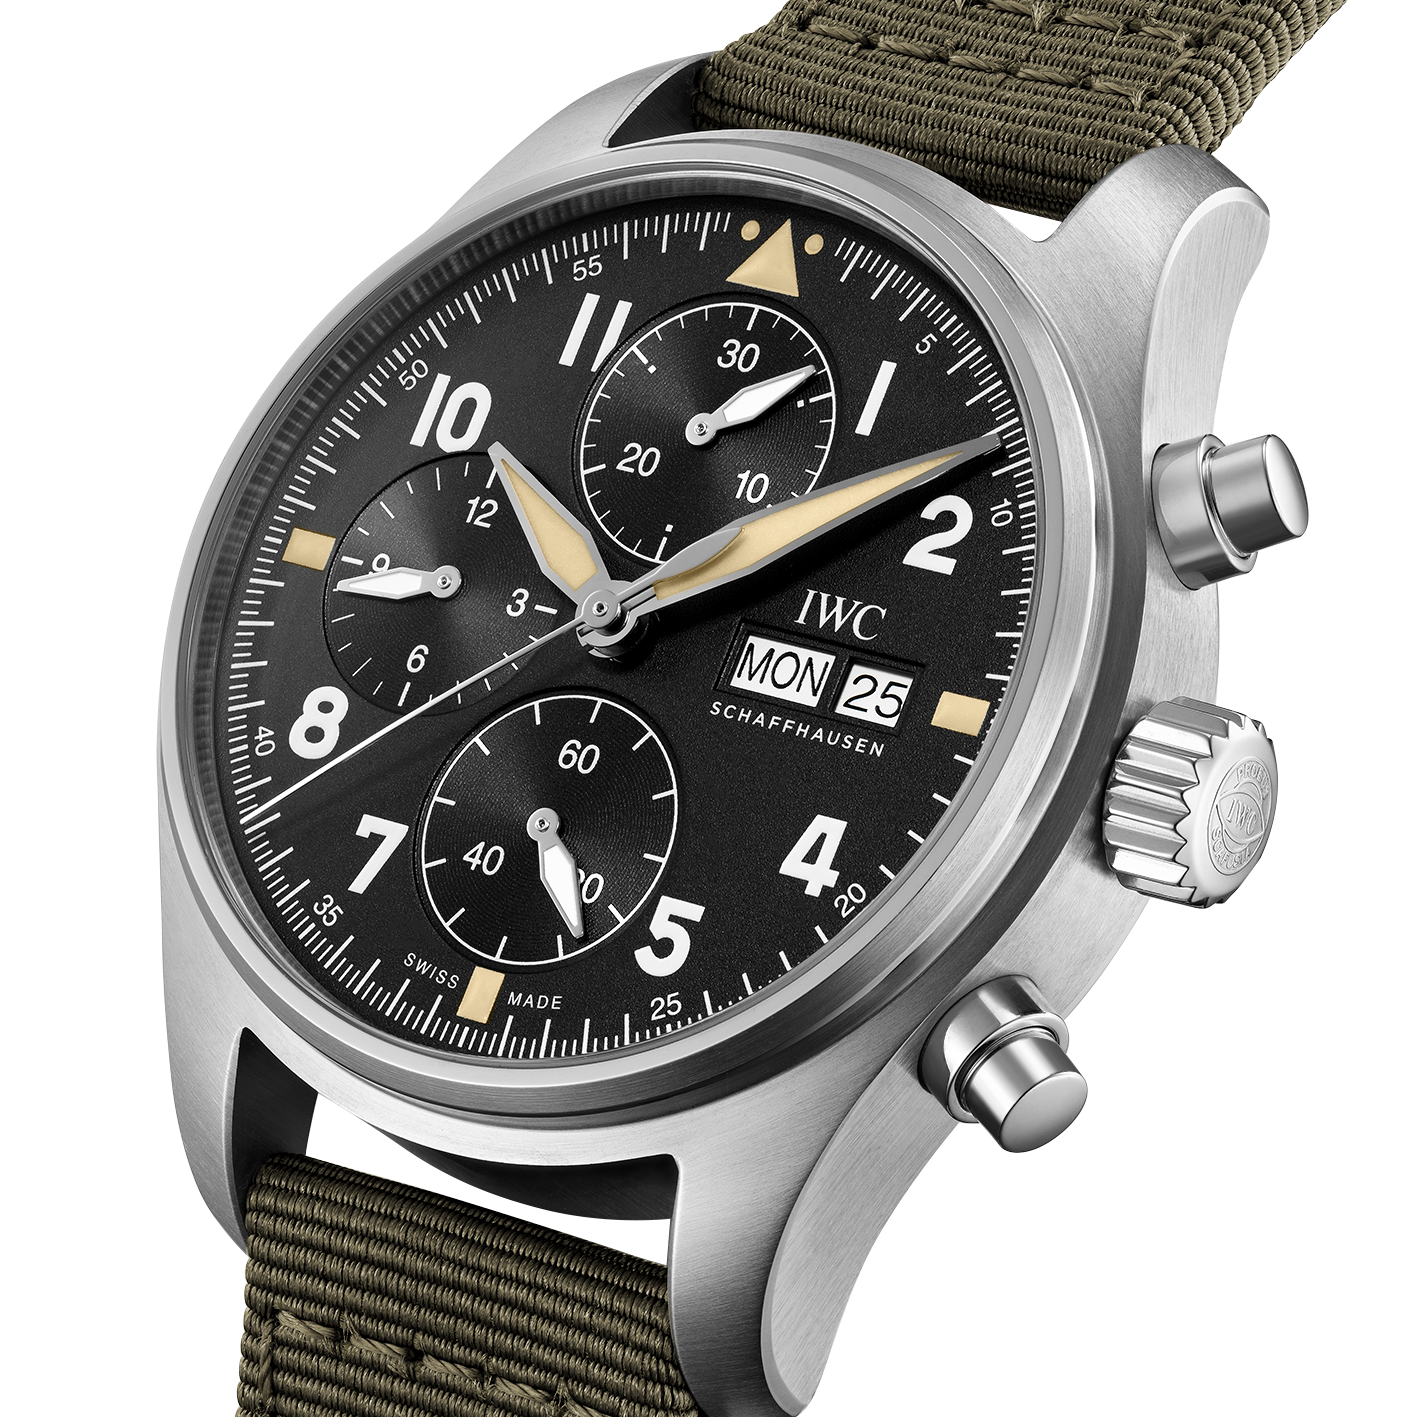 Pilot's Watches Chronograph Spitfire3